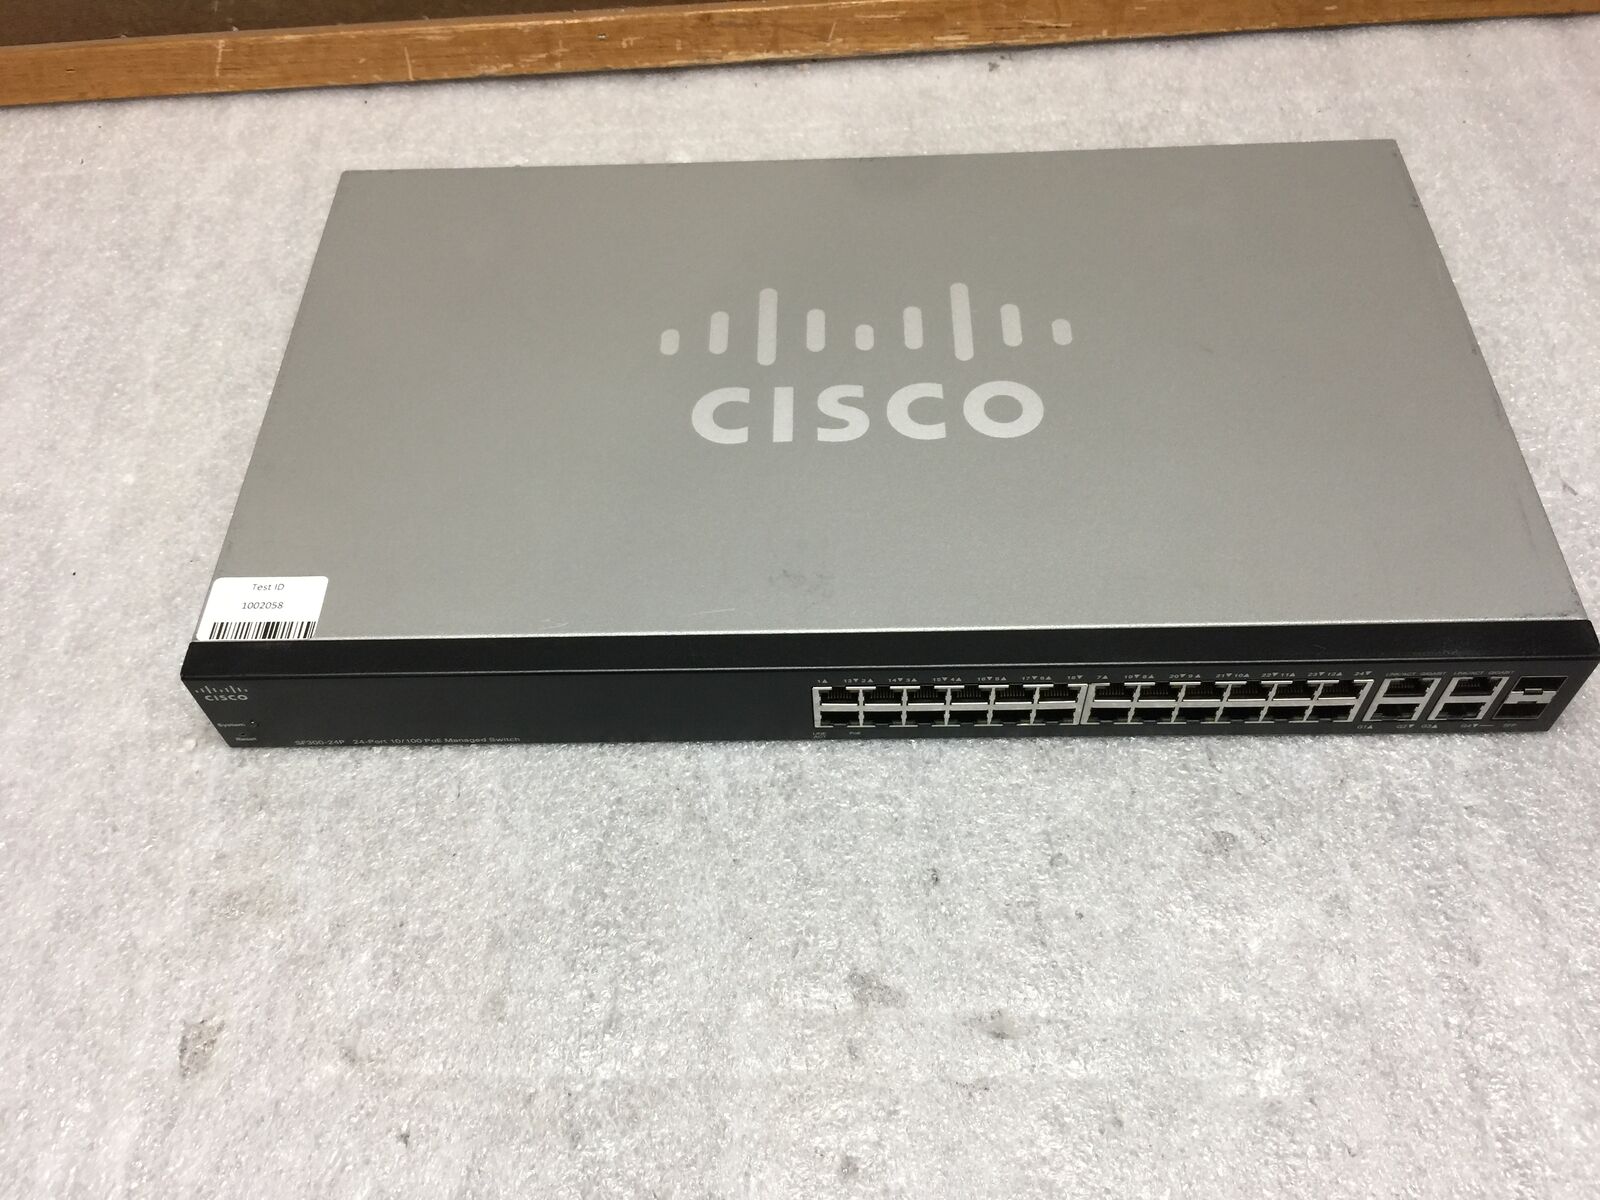 Cisco SF300-24P SRW224G4P-K9 V02 24-Port 10/100 PoE Managed Switch, Tested